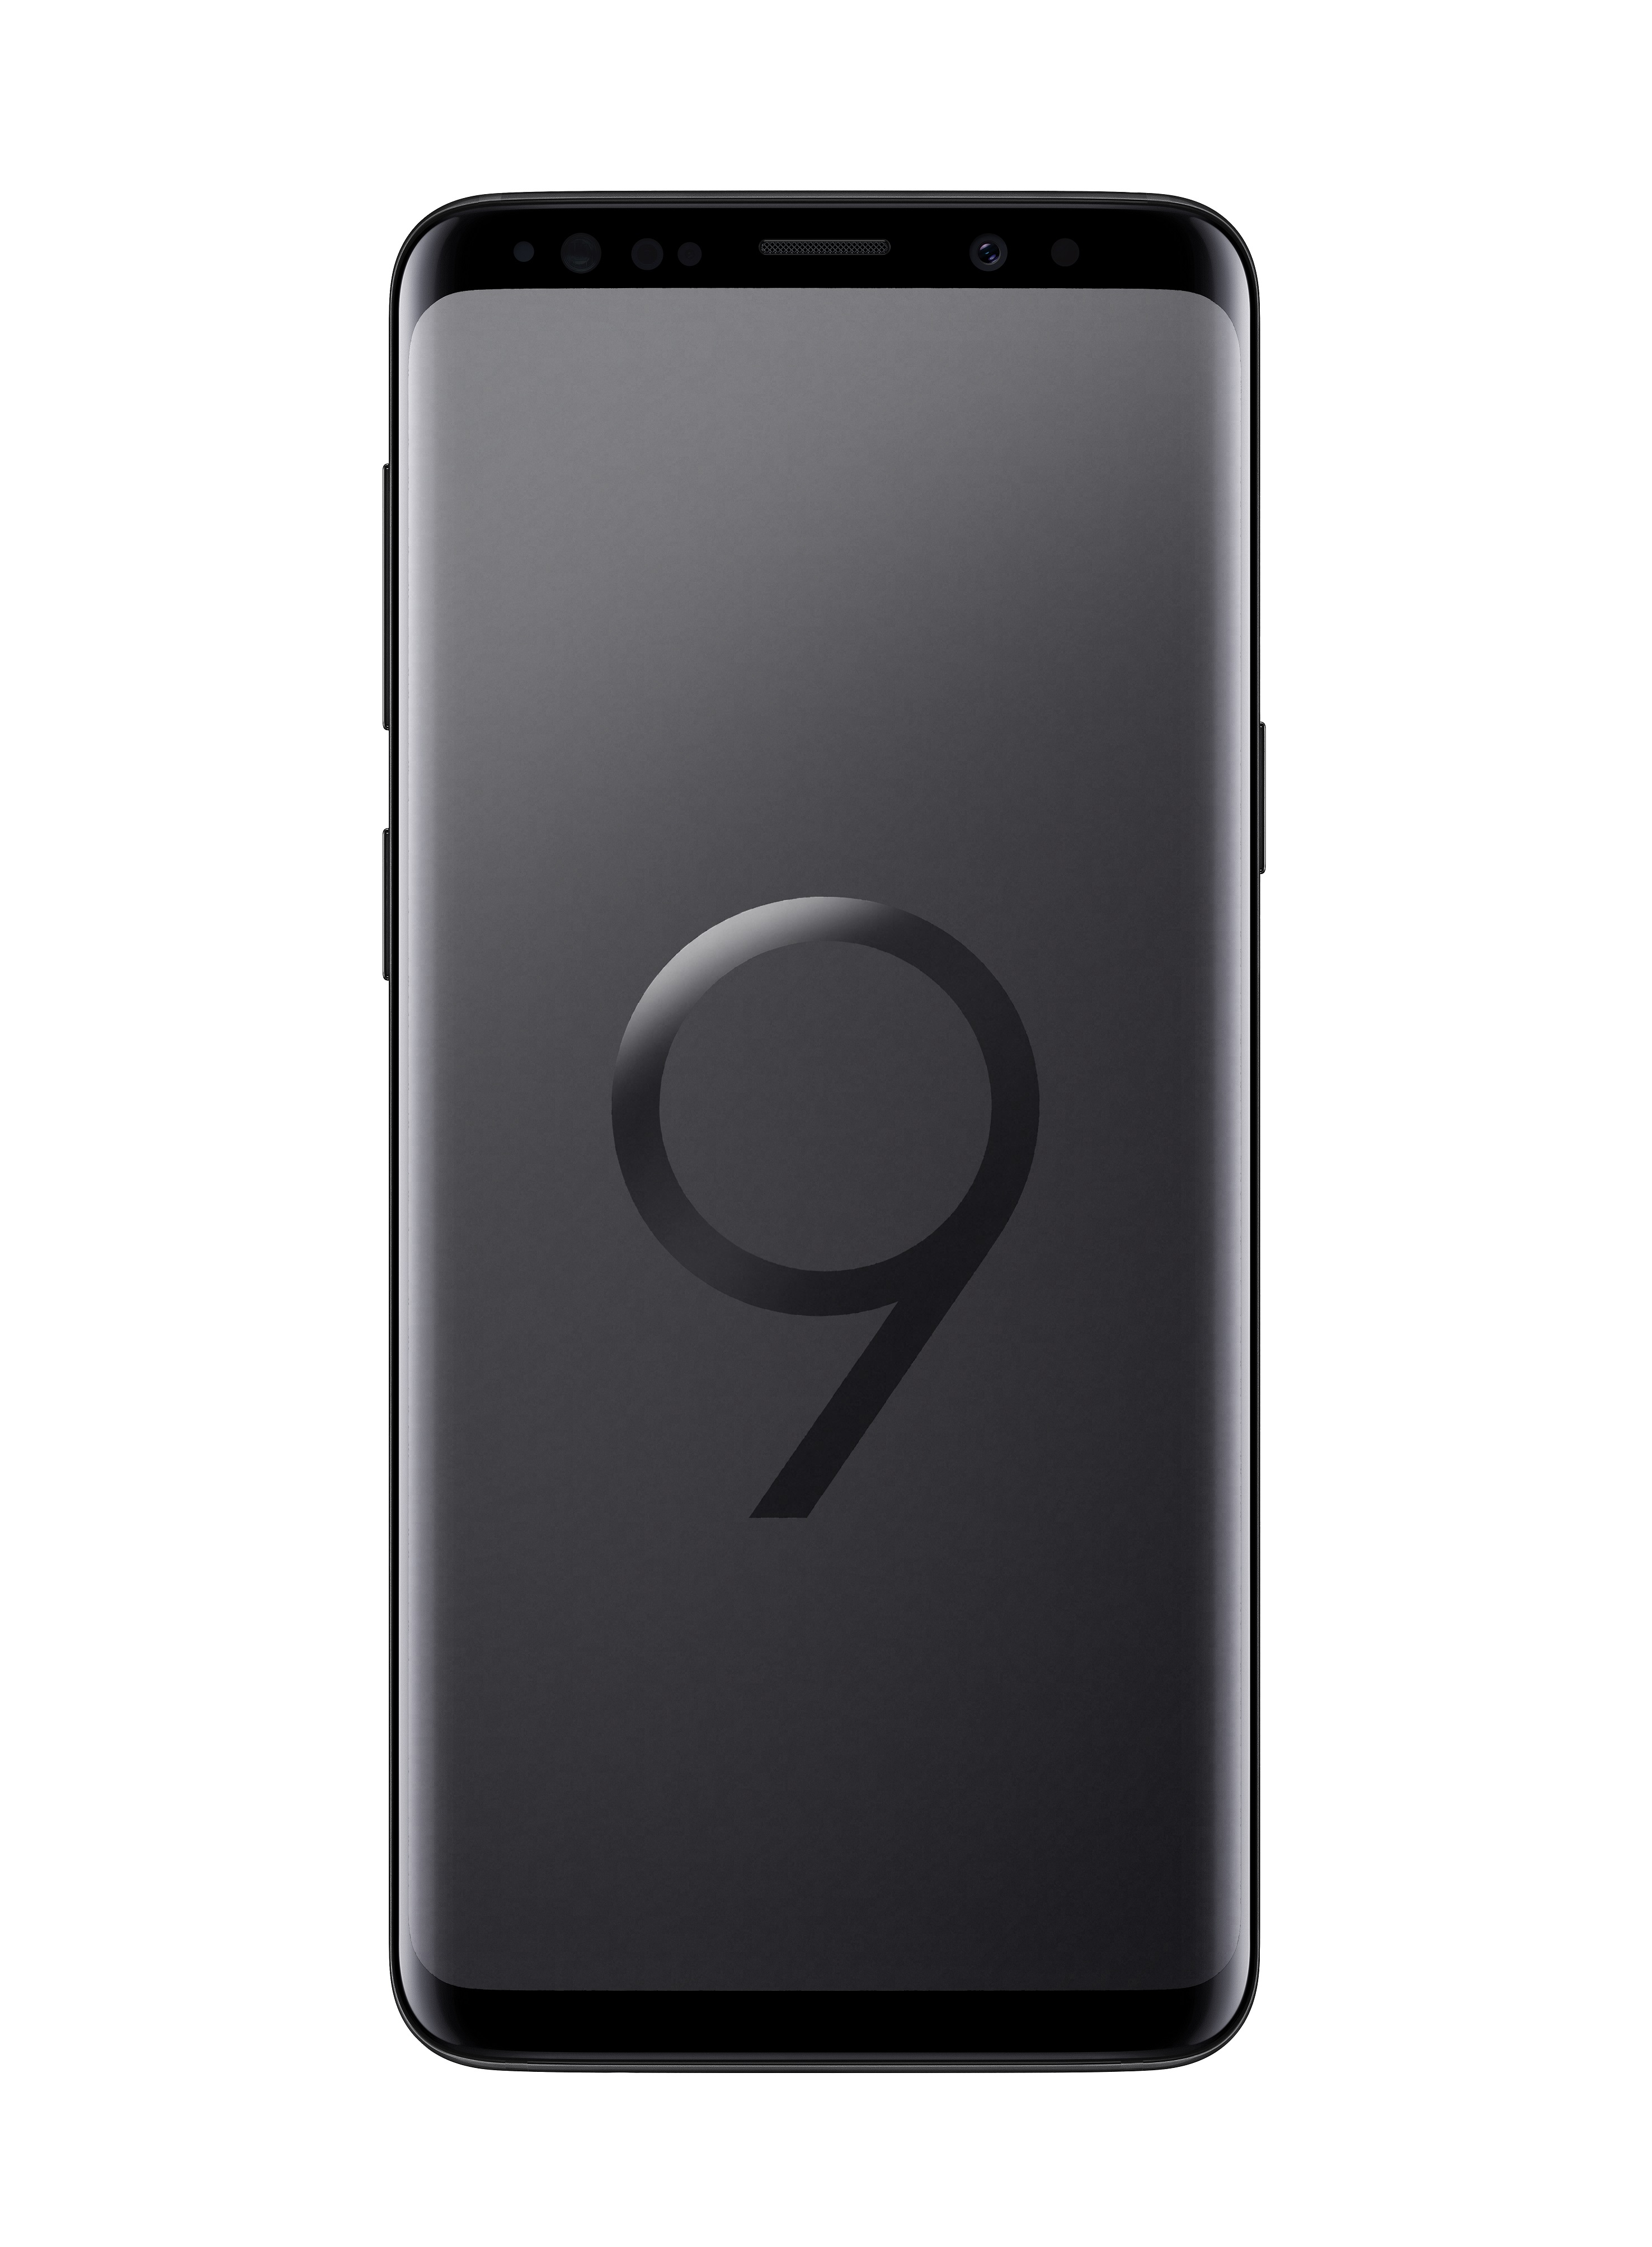 Samsung Galaxy S9 SM-G960 64GB Dual Sim, Black SM-G960FZKDXEZ